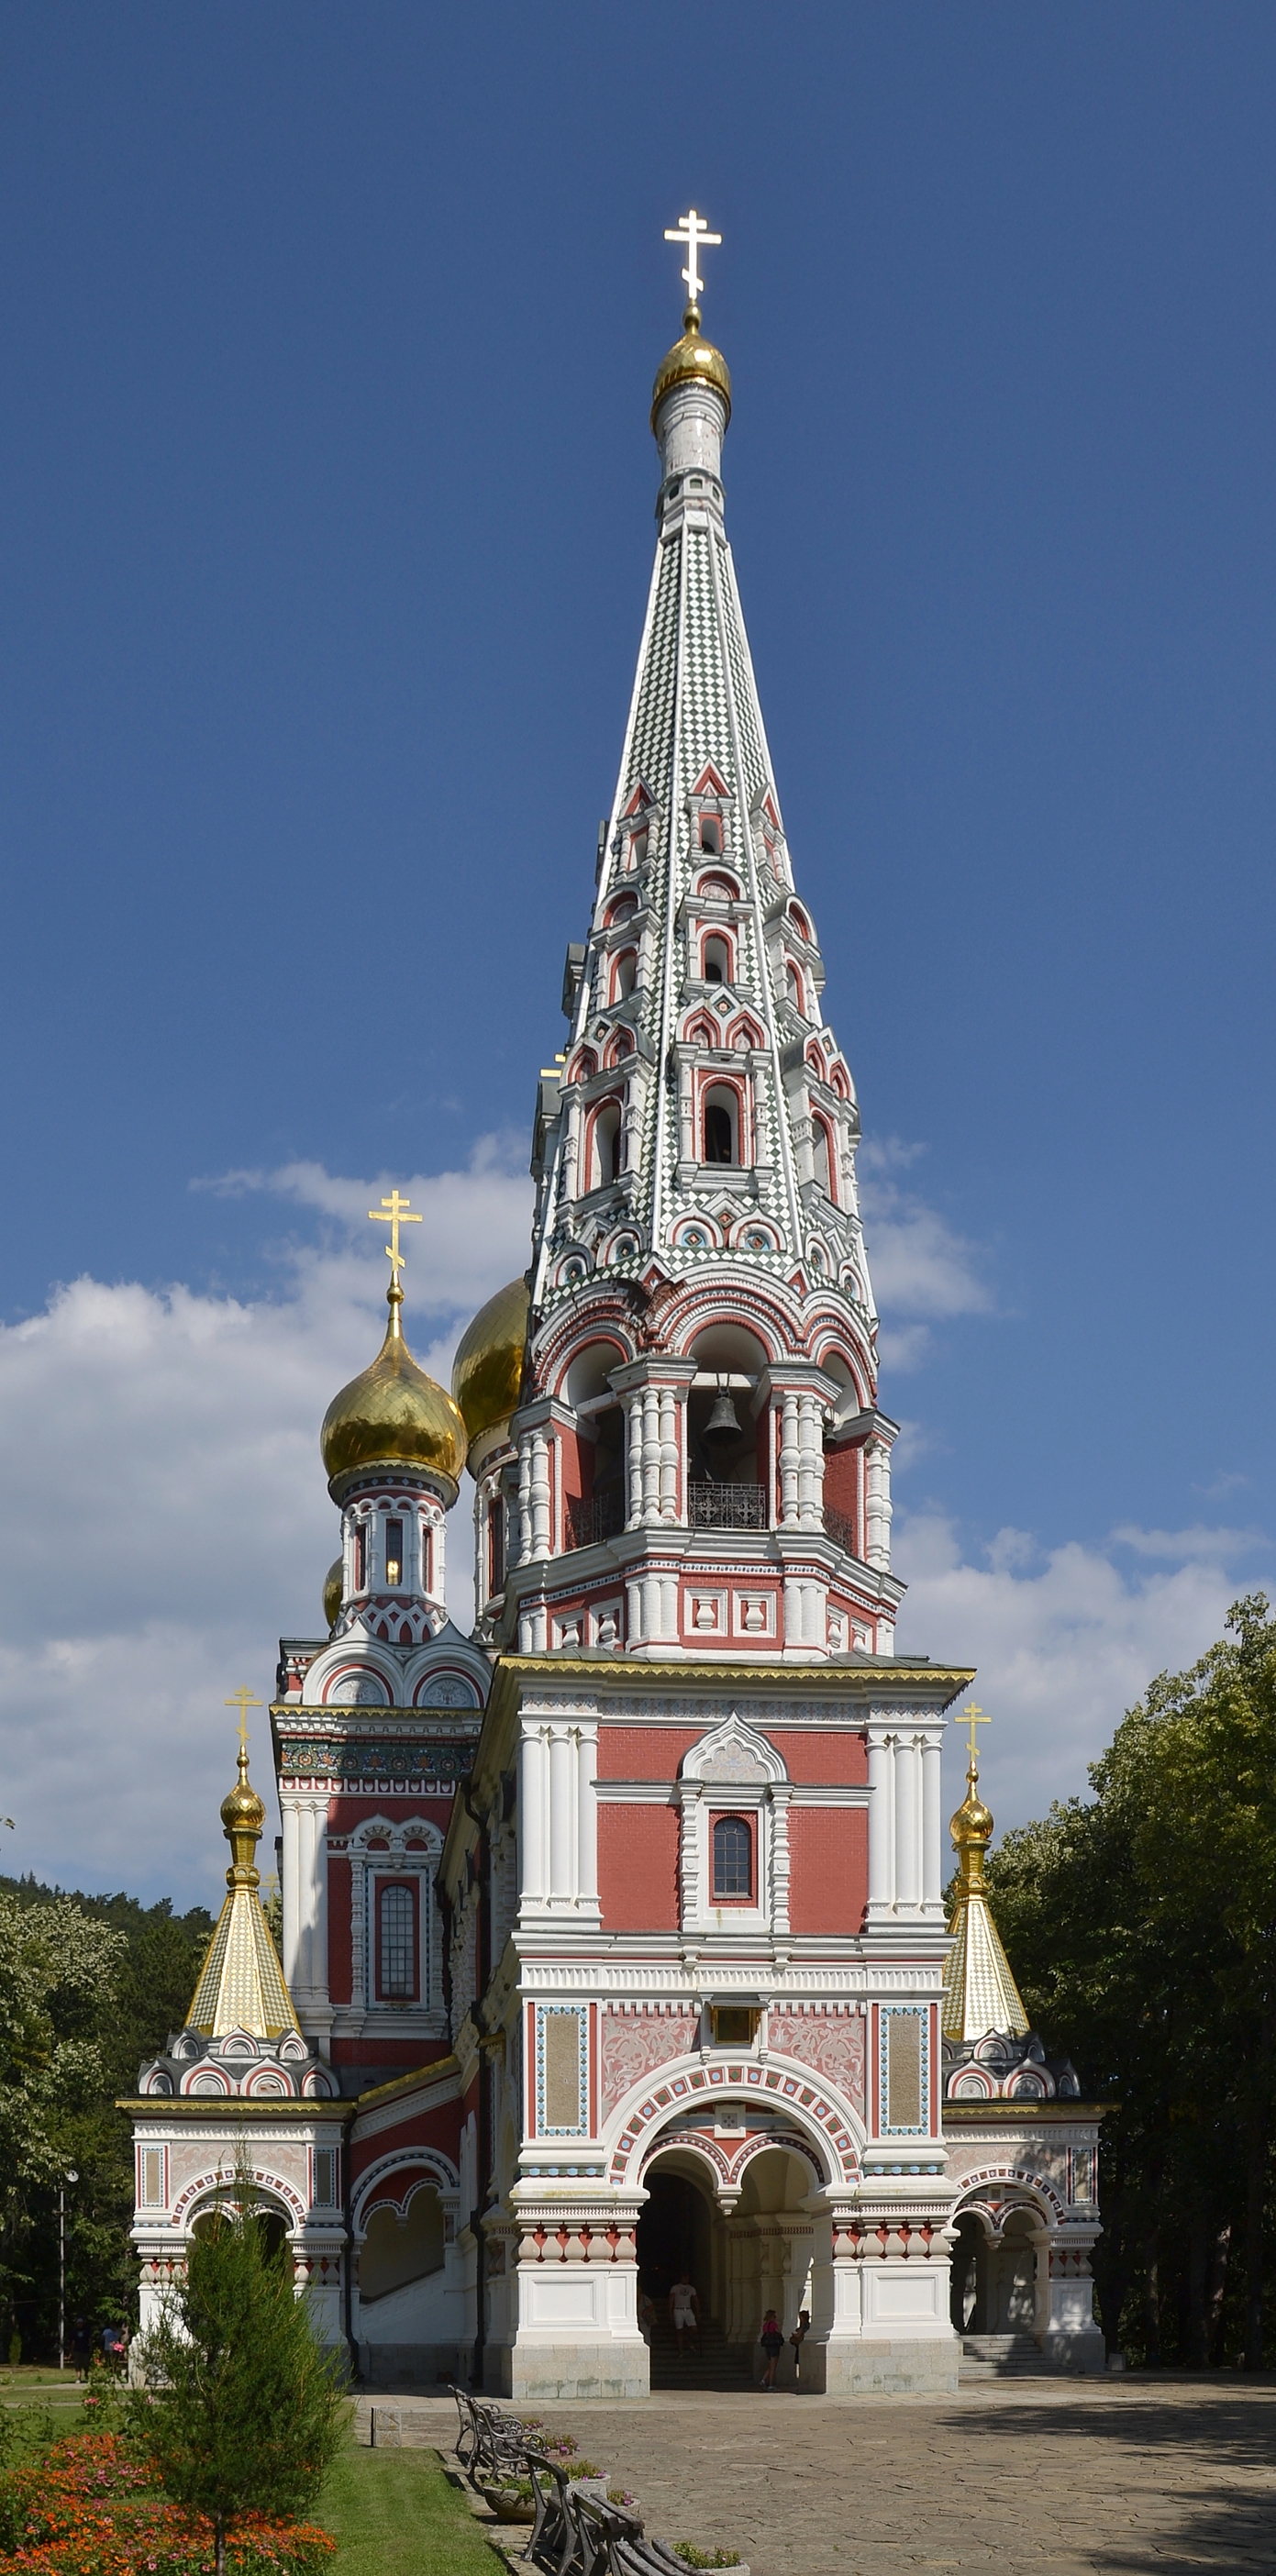 Shipka Memorial Church (by Pudelek)